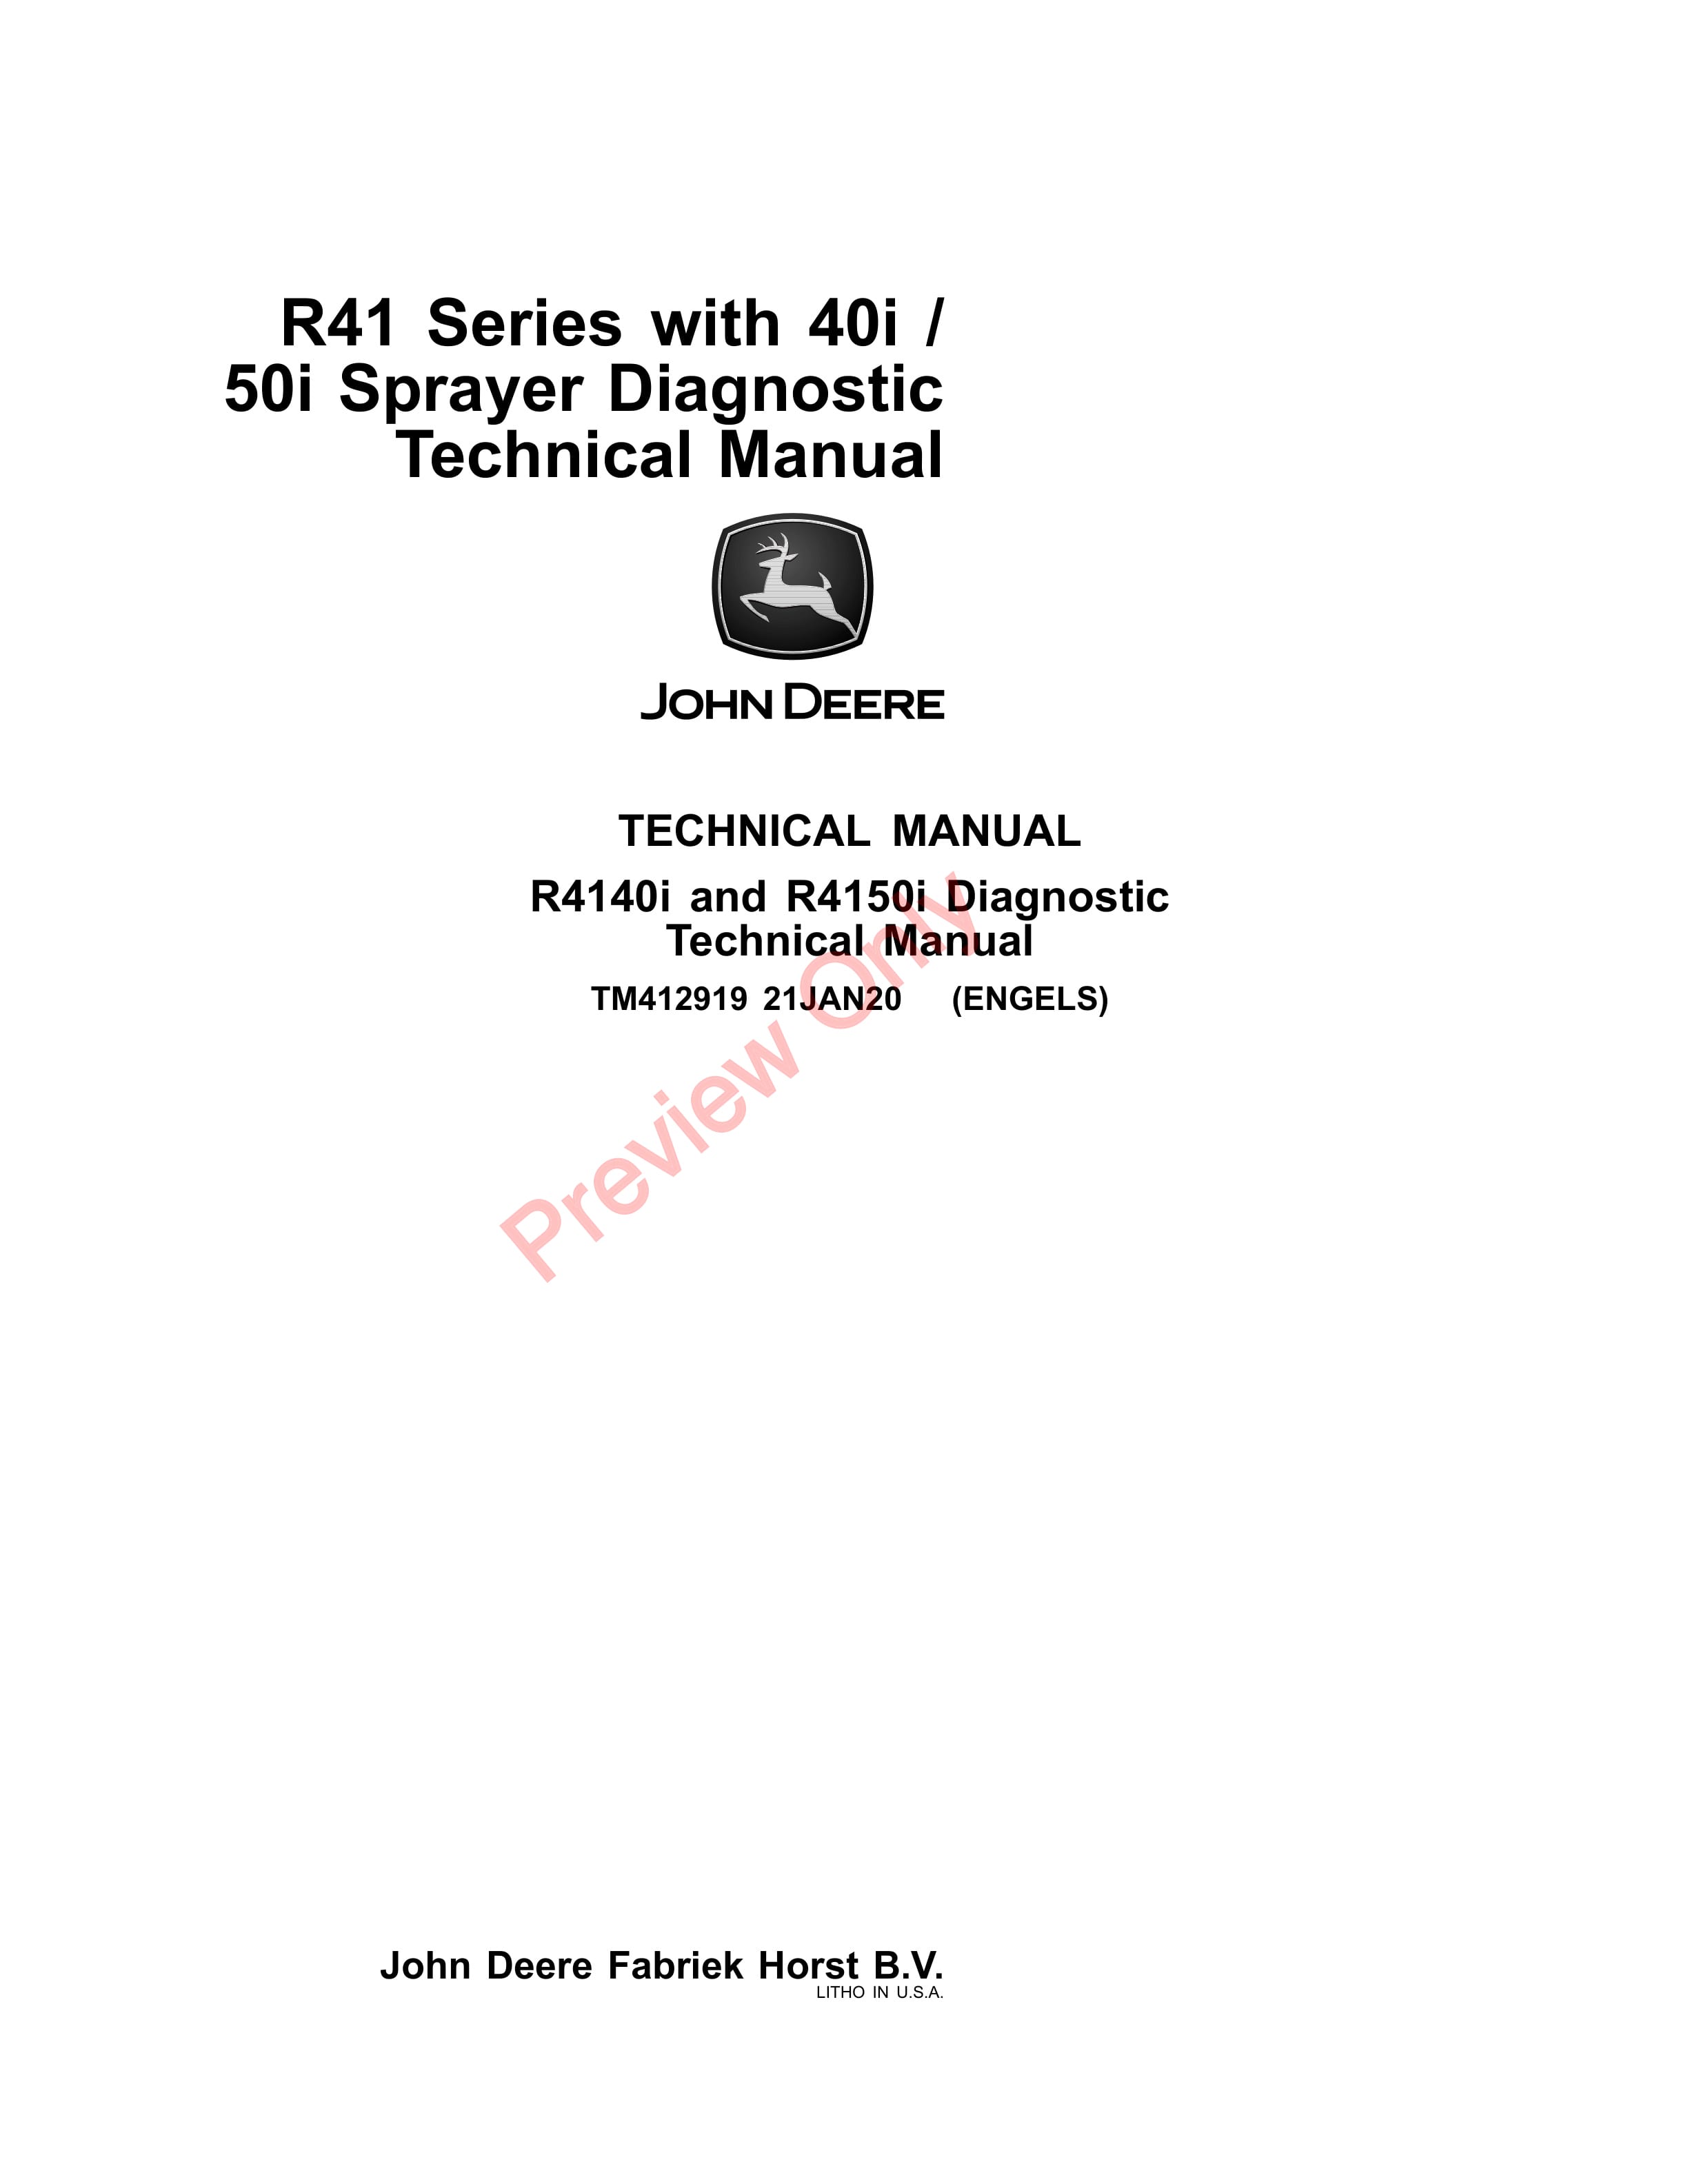 John Deere R4140i and R4150i Chemical Application Vehicle and Demountable Crop Sprayer Technical Manual TM412919 21JAN20 1